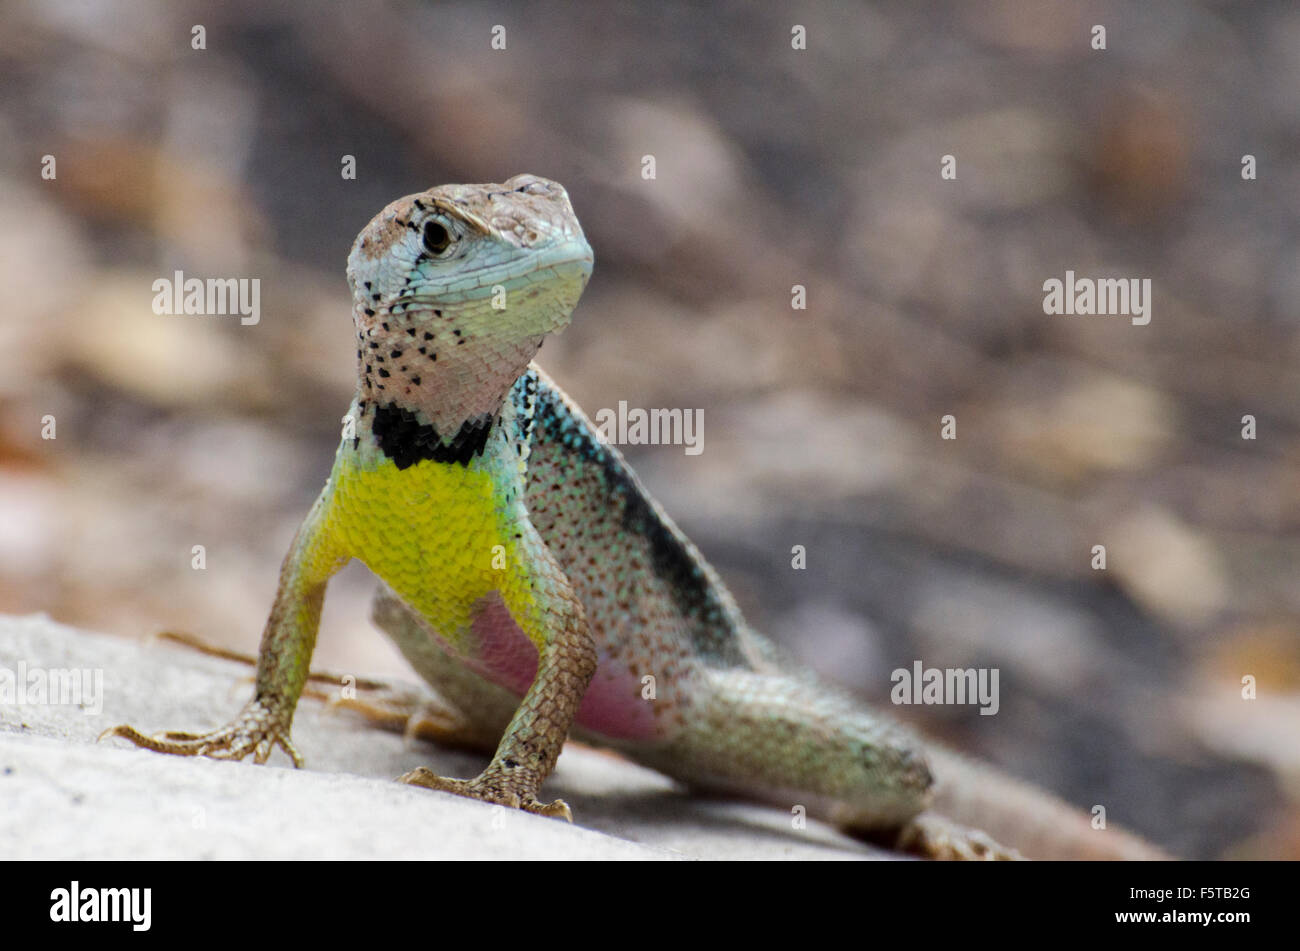 Striking Lizard, Bosque Cerro Blanco, Guayaquil, Ecuador Stock Photo